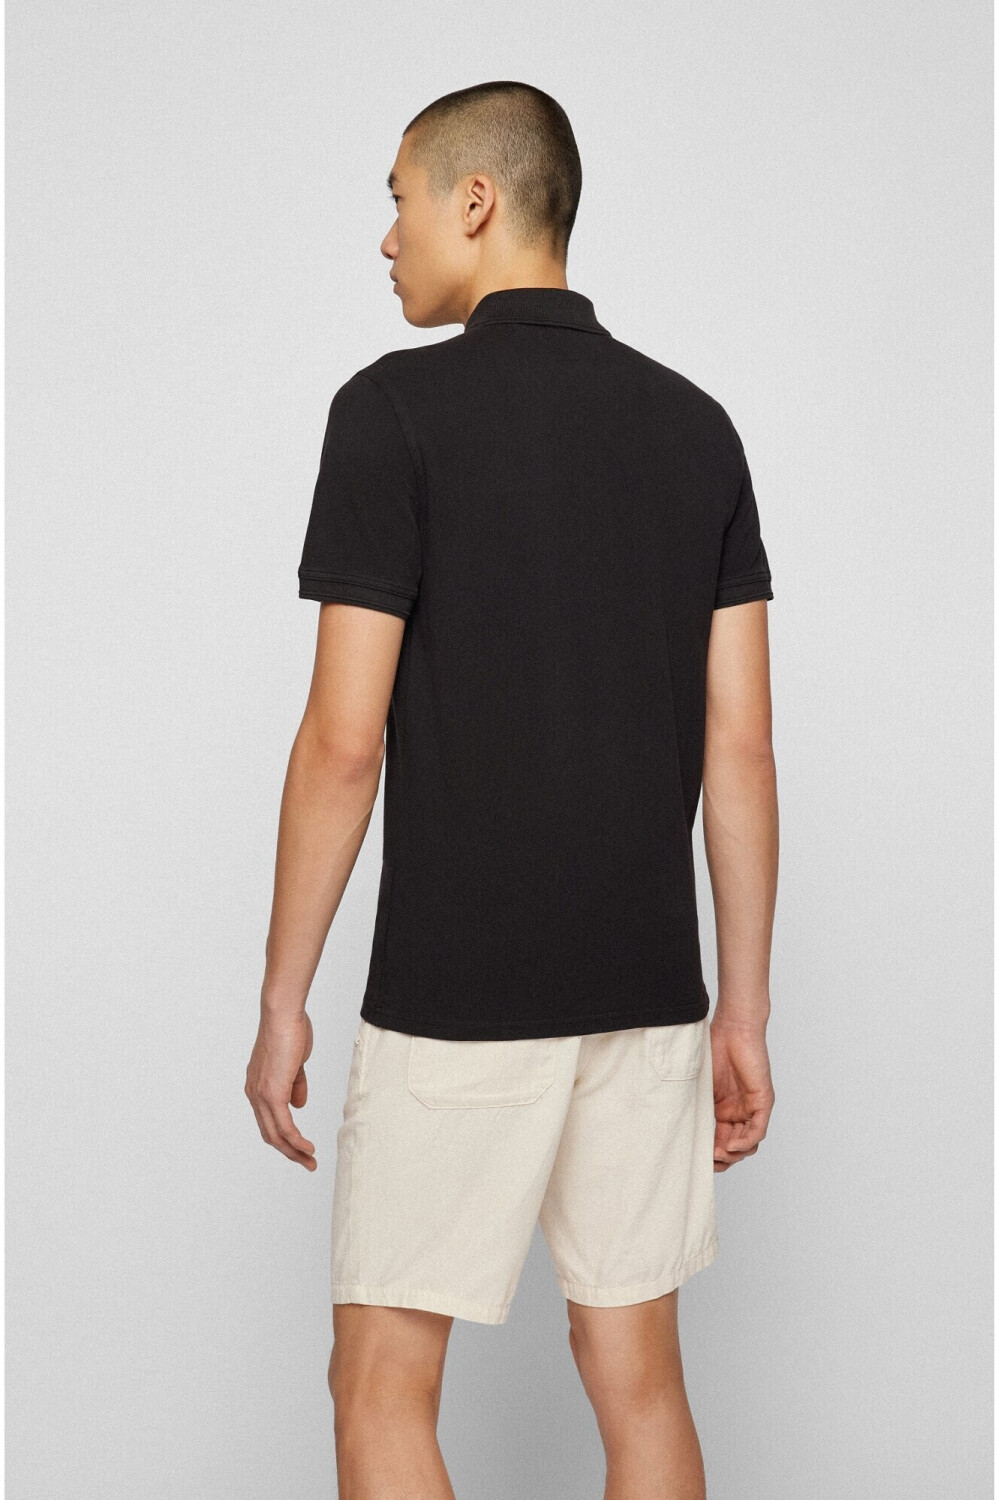 Hugo Boss Prime Slim-Fit Poloshirt Preisvergleich ab (50468576-001) bei € 48,00 black 